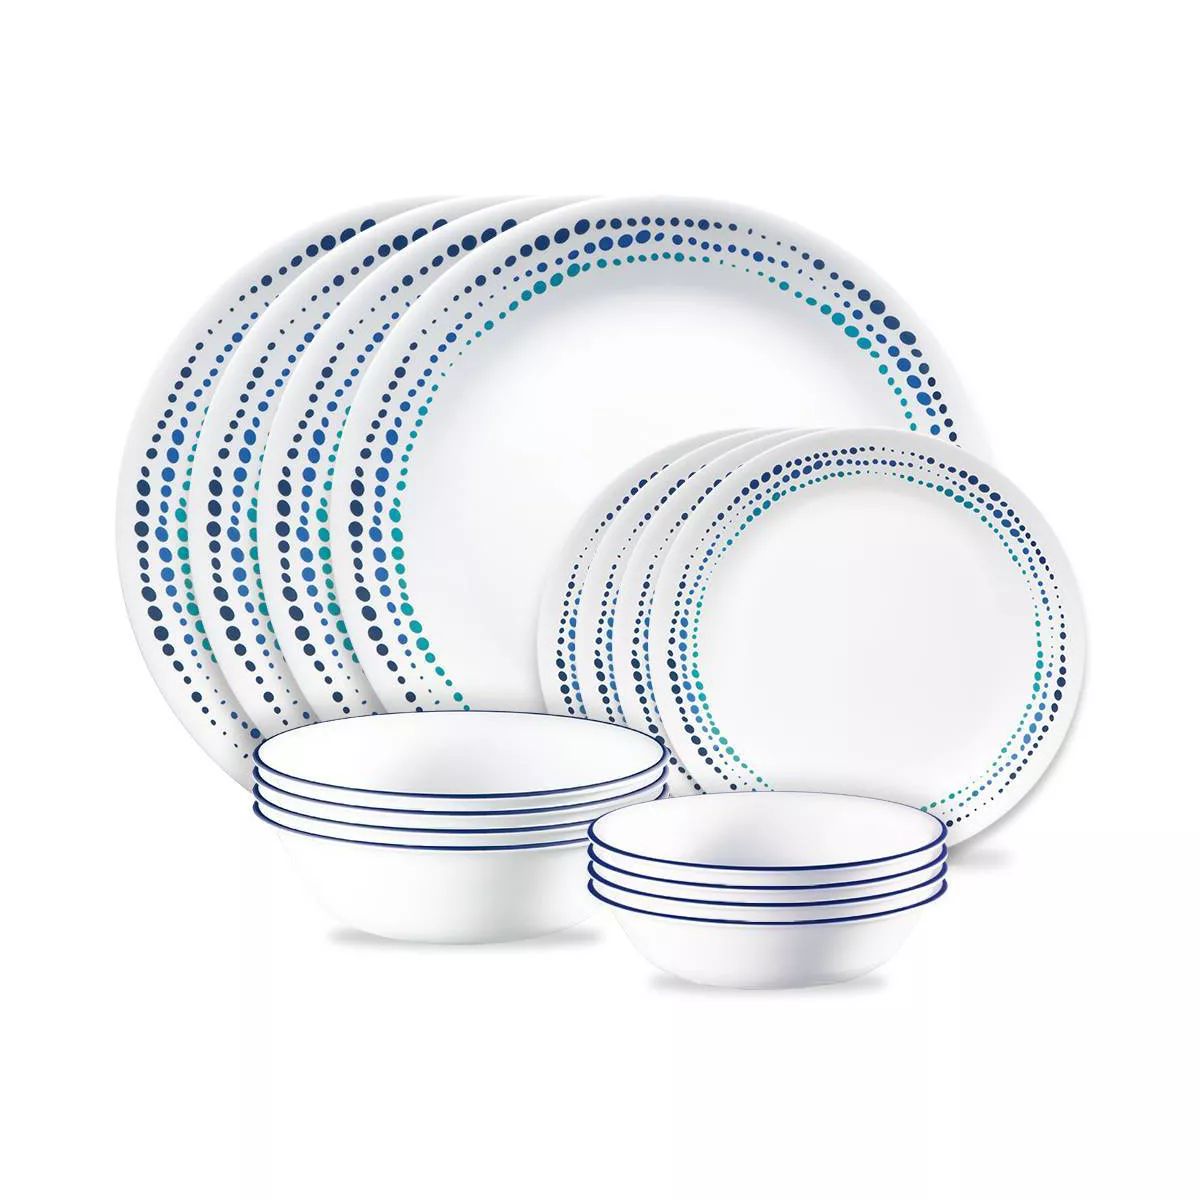 Corelle 16pc Vitrelle Ocean Blues Dinnerware Set | Target